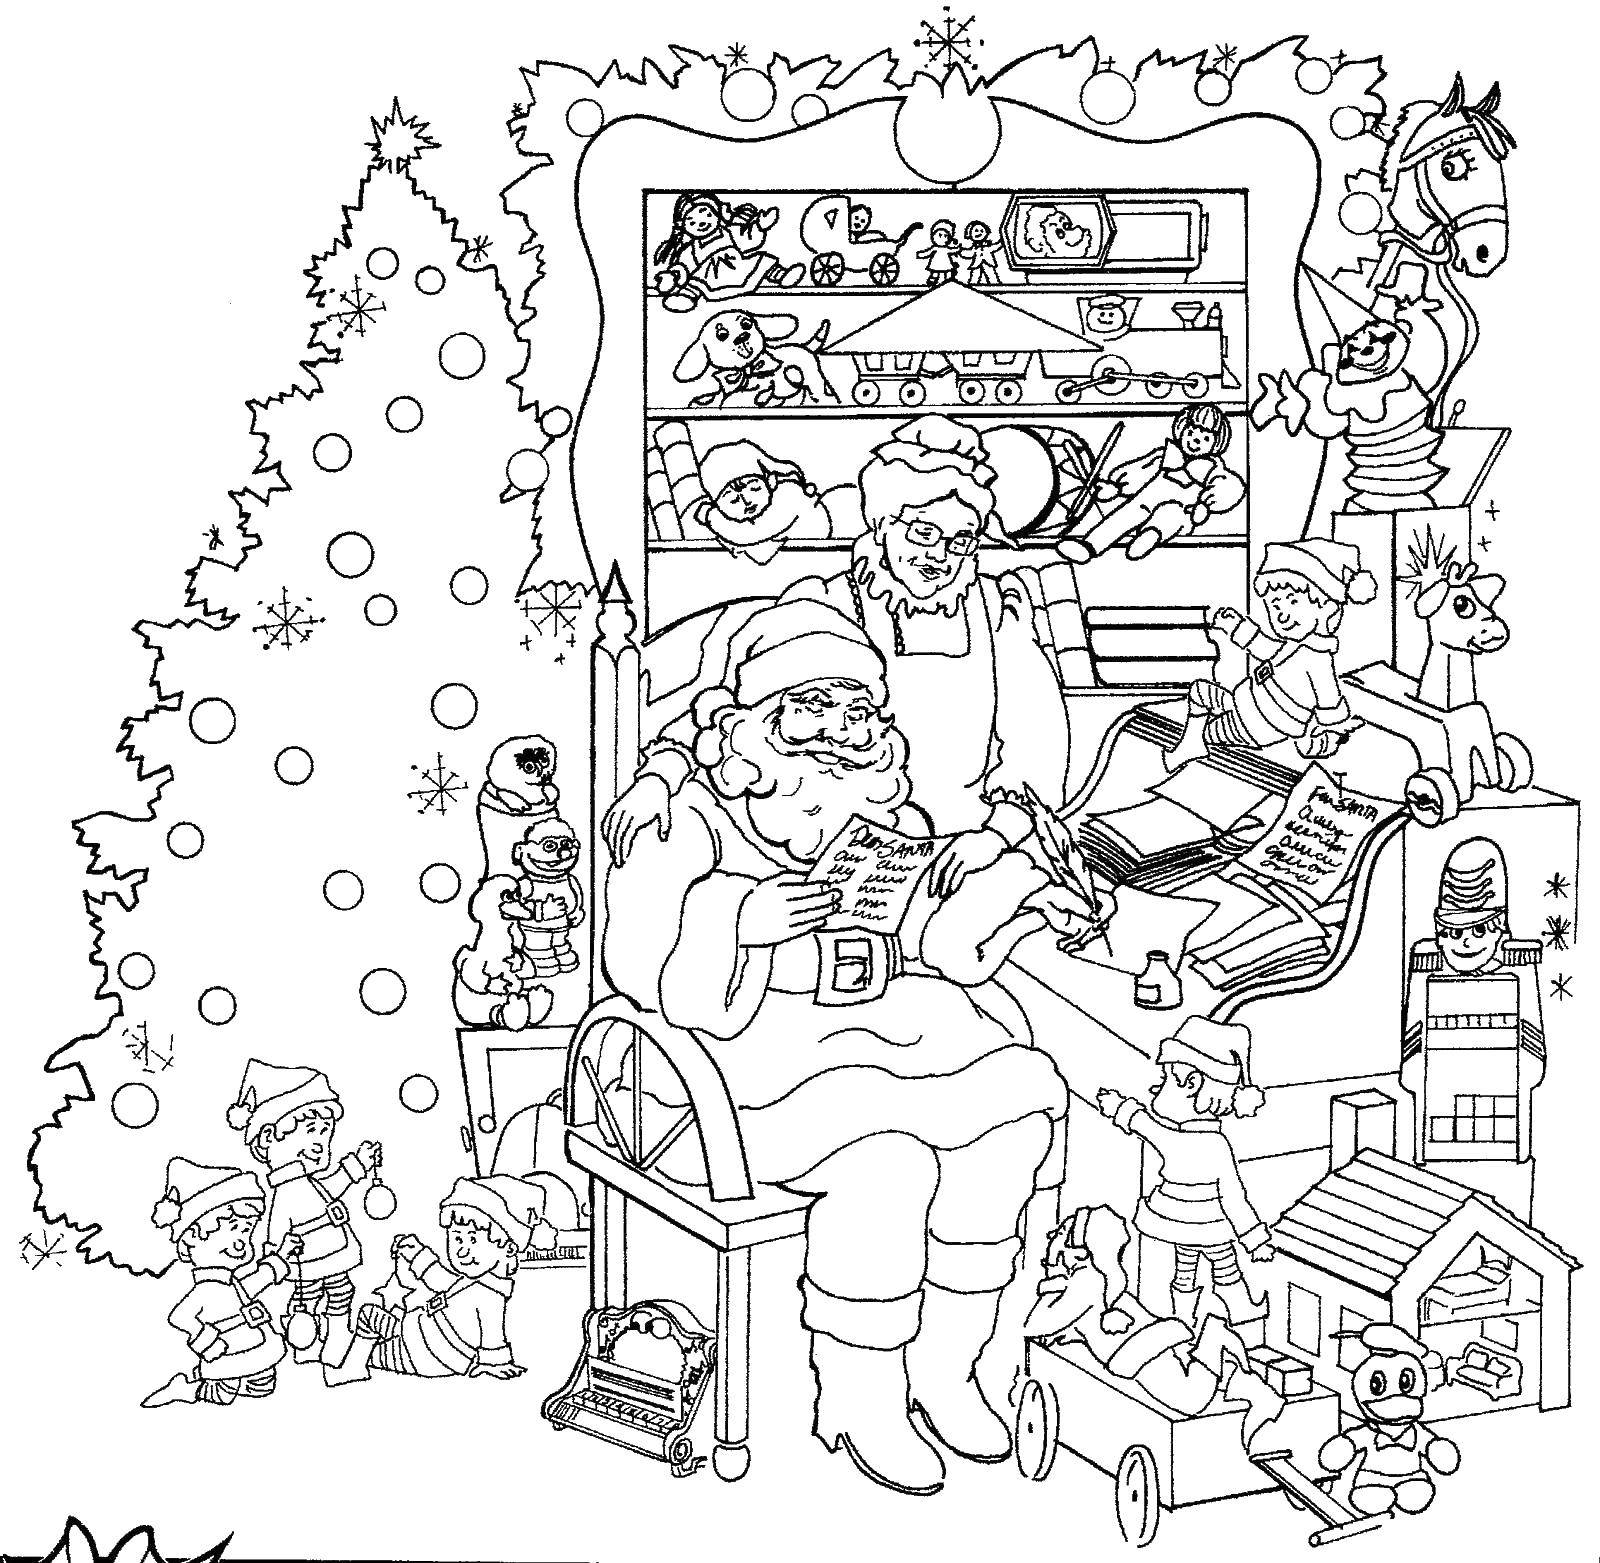 Coloring Santa Claus and his wife. Category Christmas. Tags:  Santa Claus, Christmas.